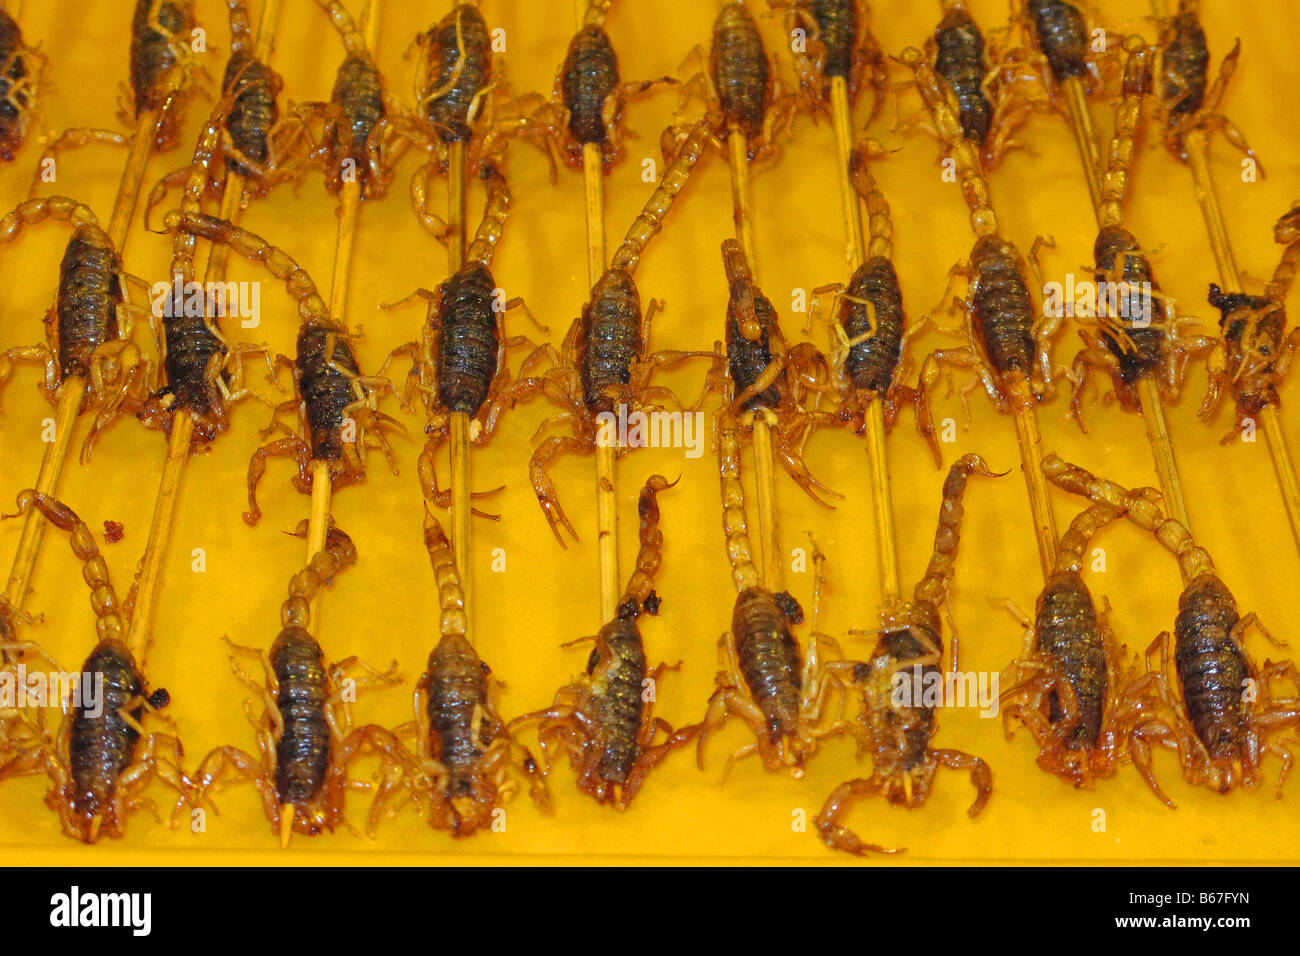 Scorpion snacks Stock Photo